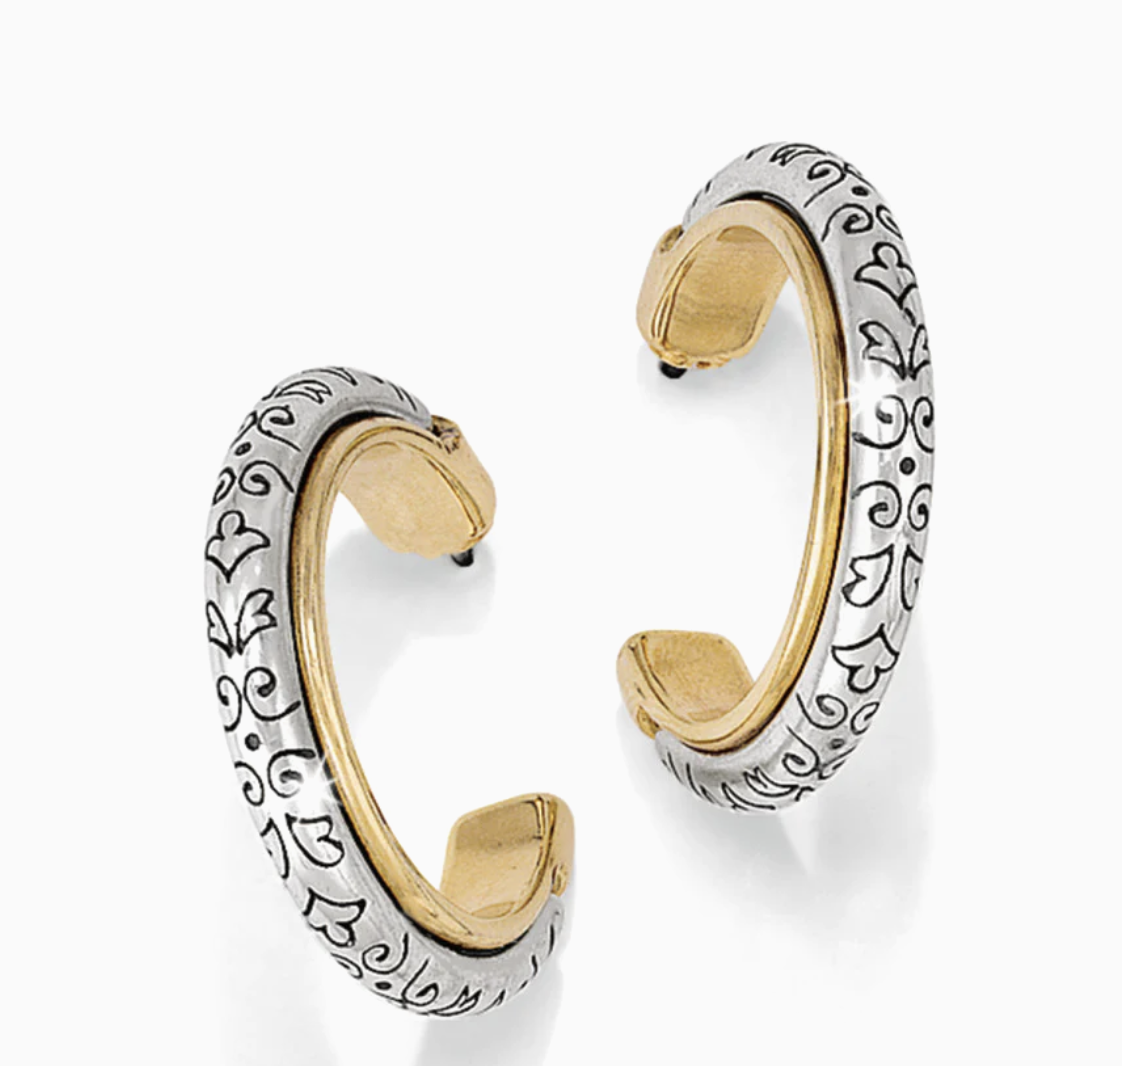 Diamond Engagement Rings Houston, TX - Venazia Jewelry